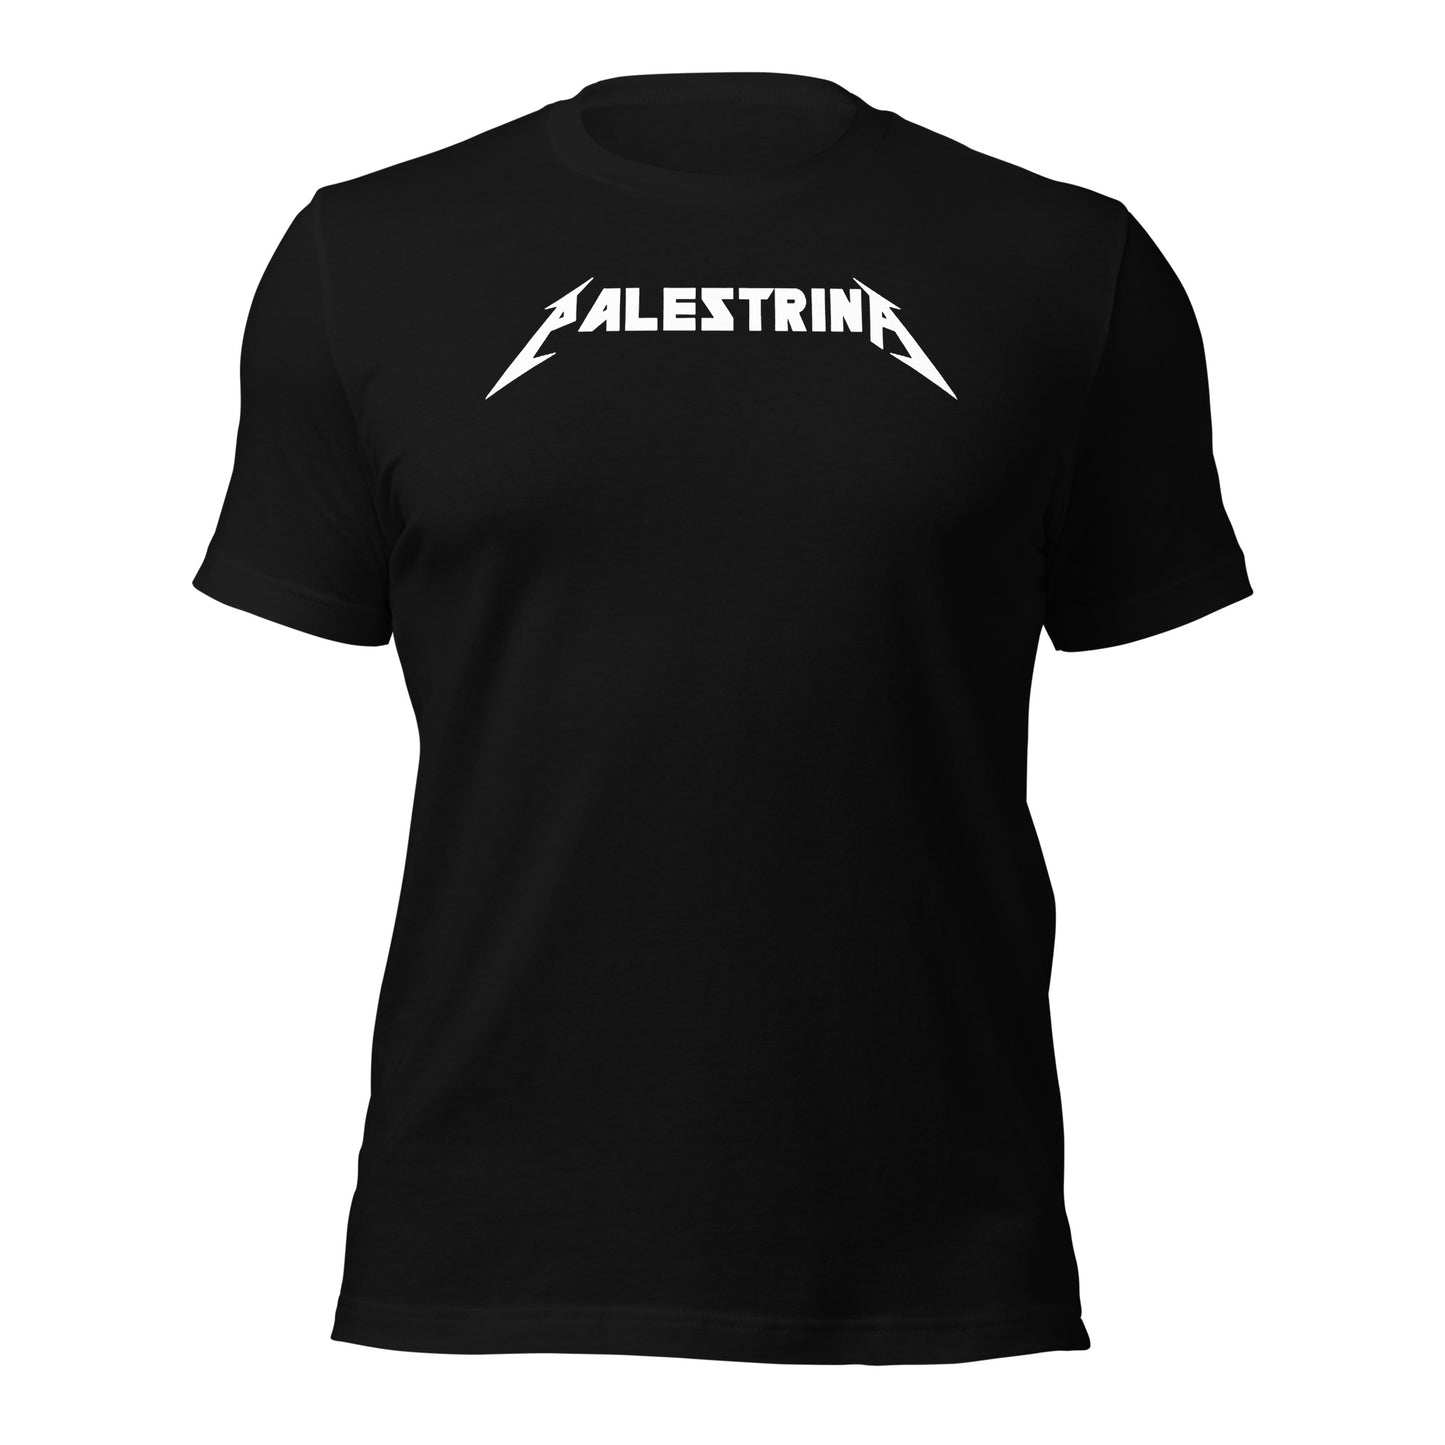 Giovanni Pierluigi da Palestrina - Band Tees Unisex t-shirt